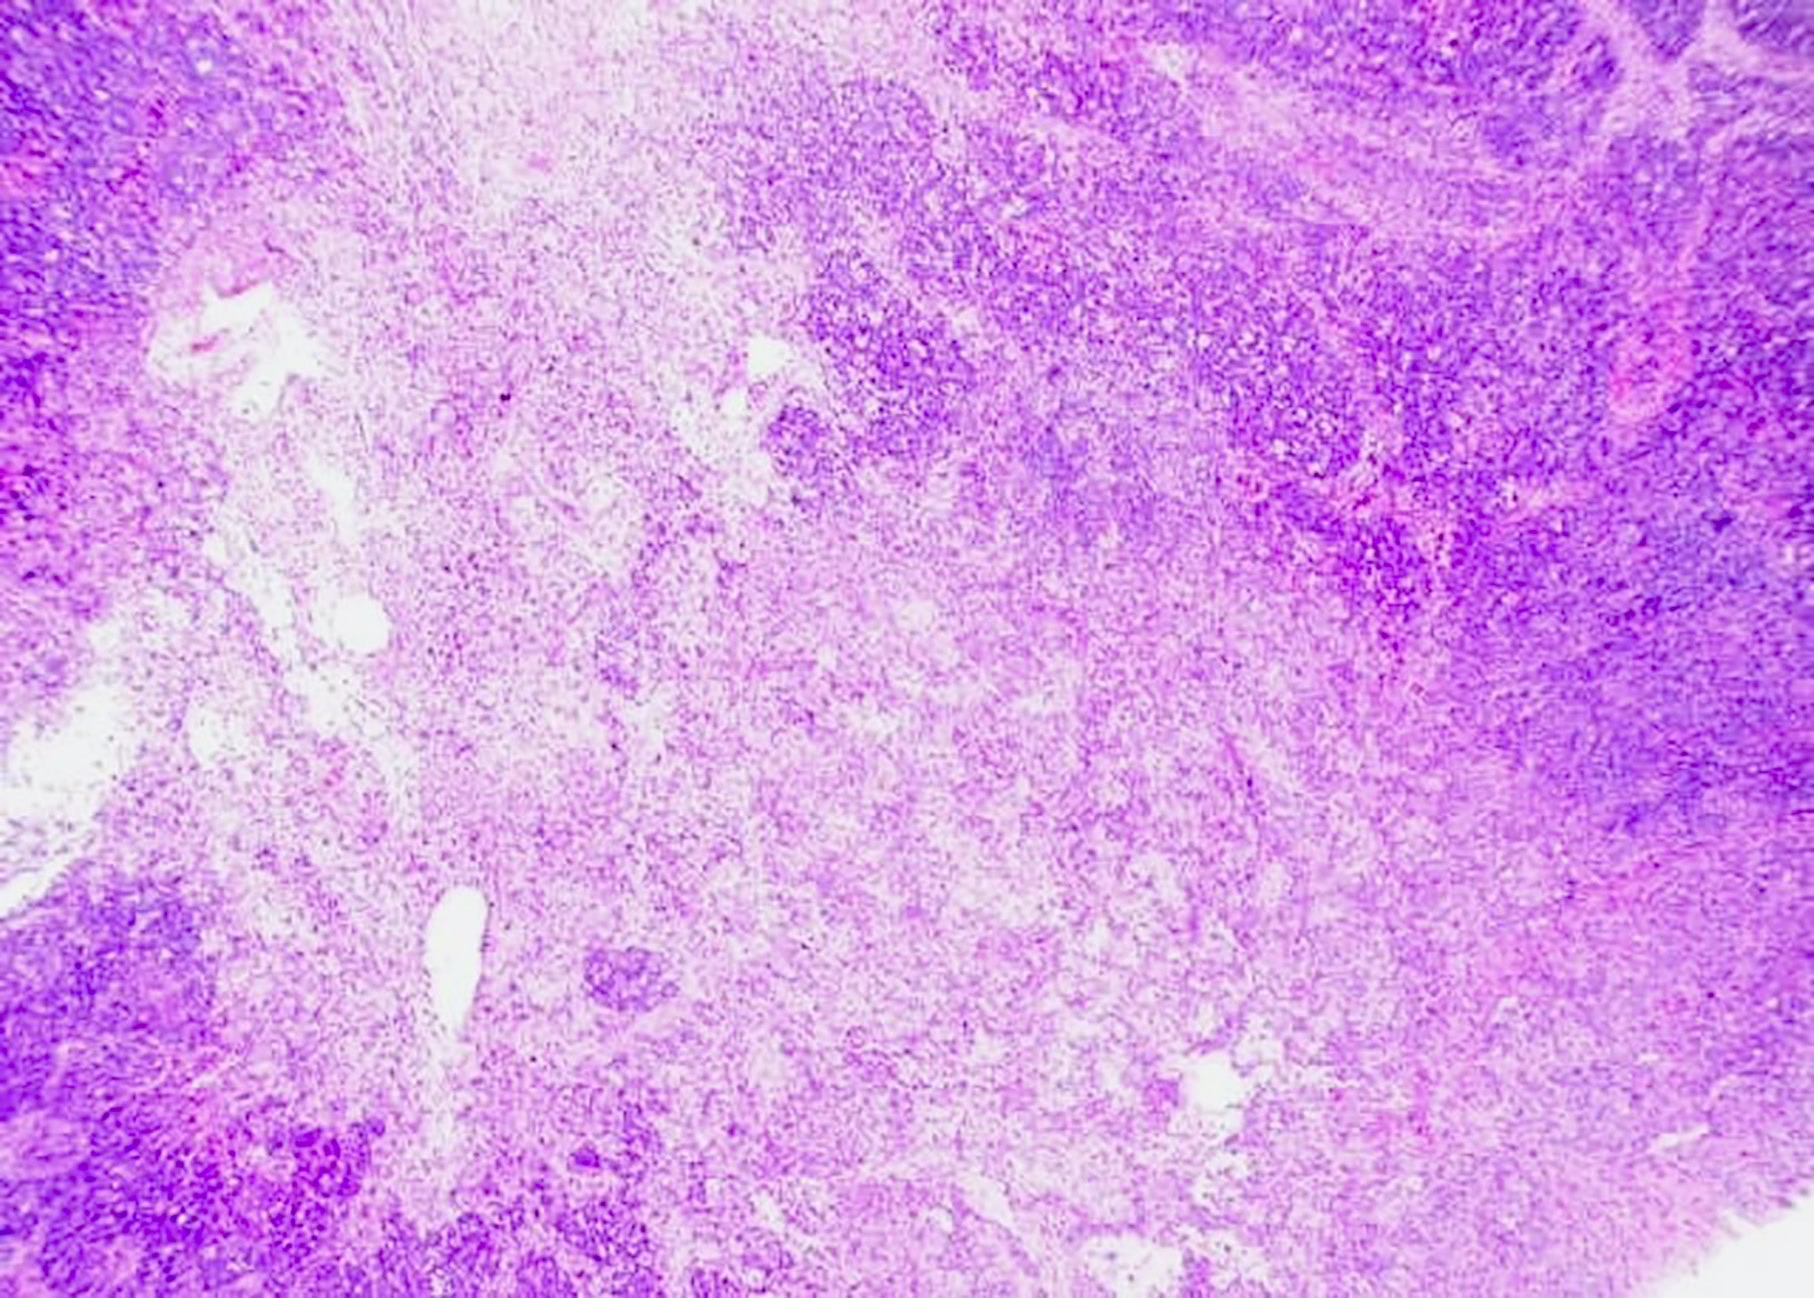 Kaposi sarcoma in a case of HHV8 MCD